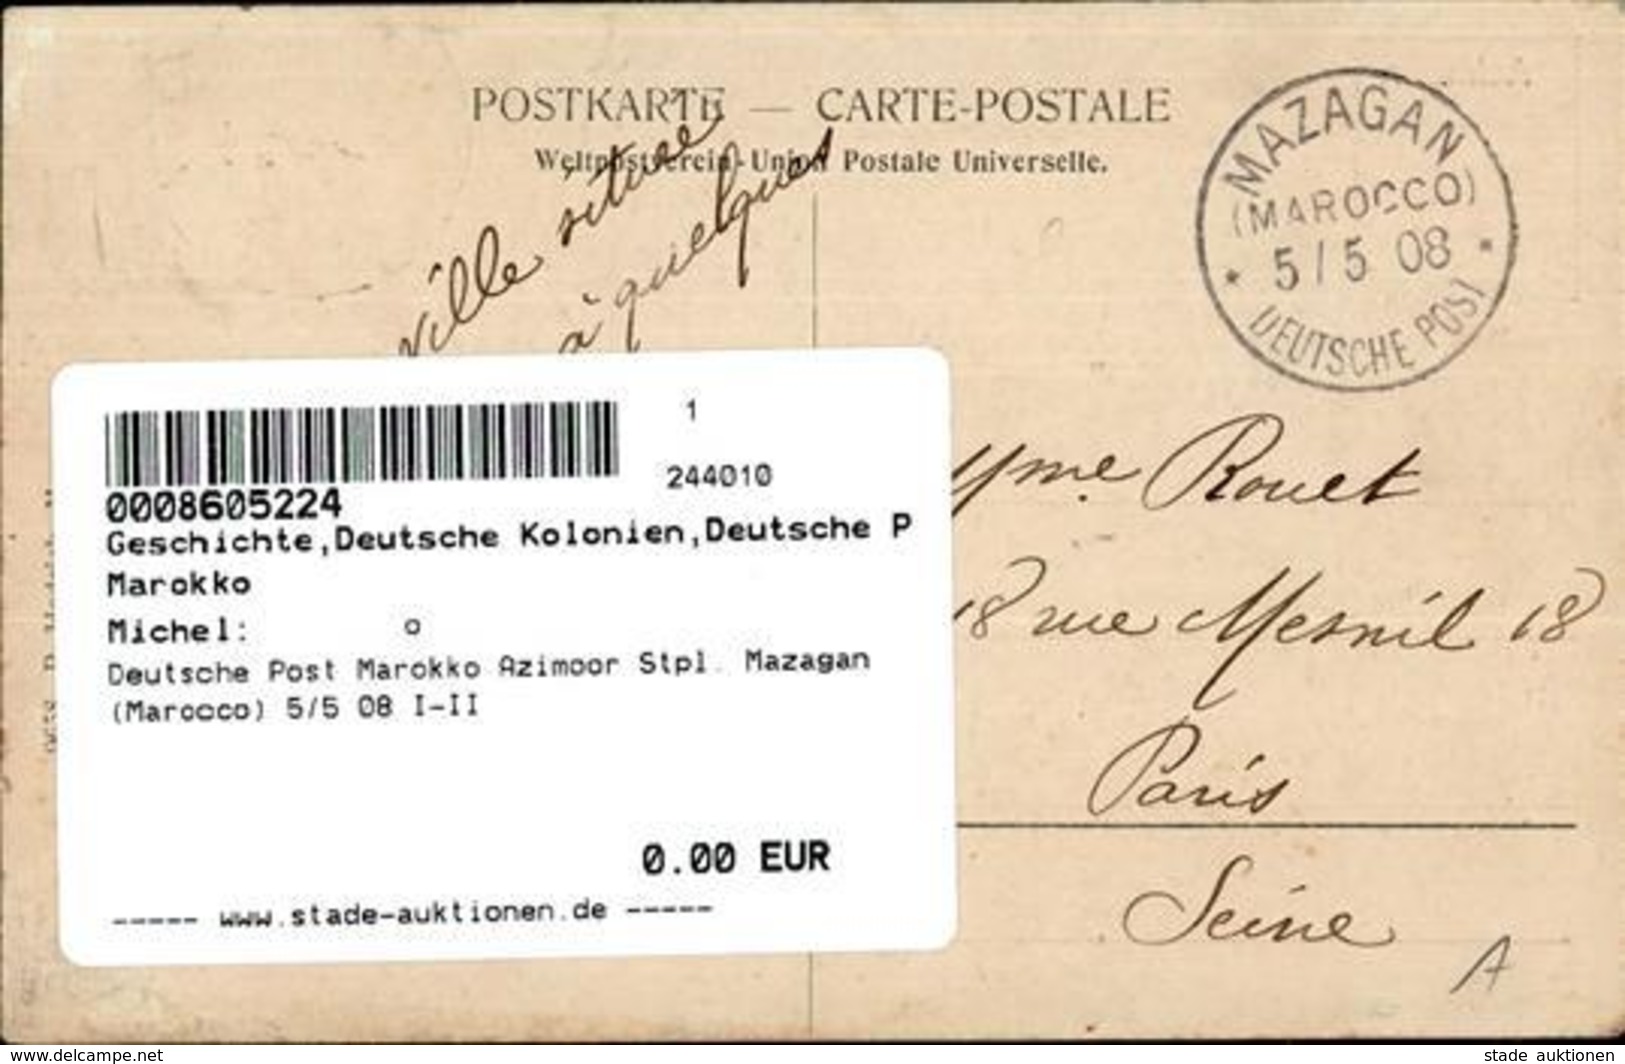 Deutsche Post Marokko Azimoor Stpl. Mazagan (Marocco) 5/5 08 I-II - History